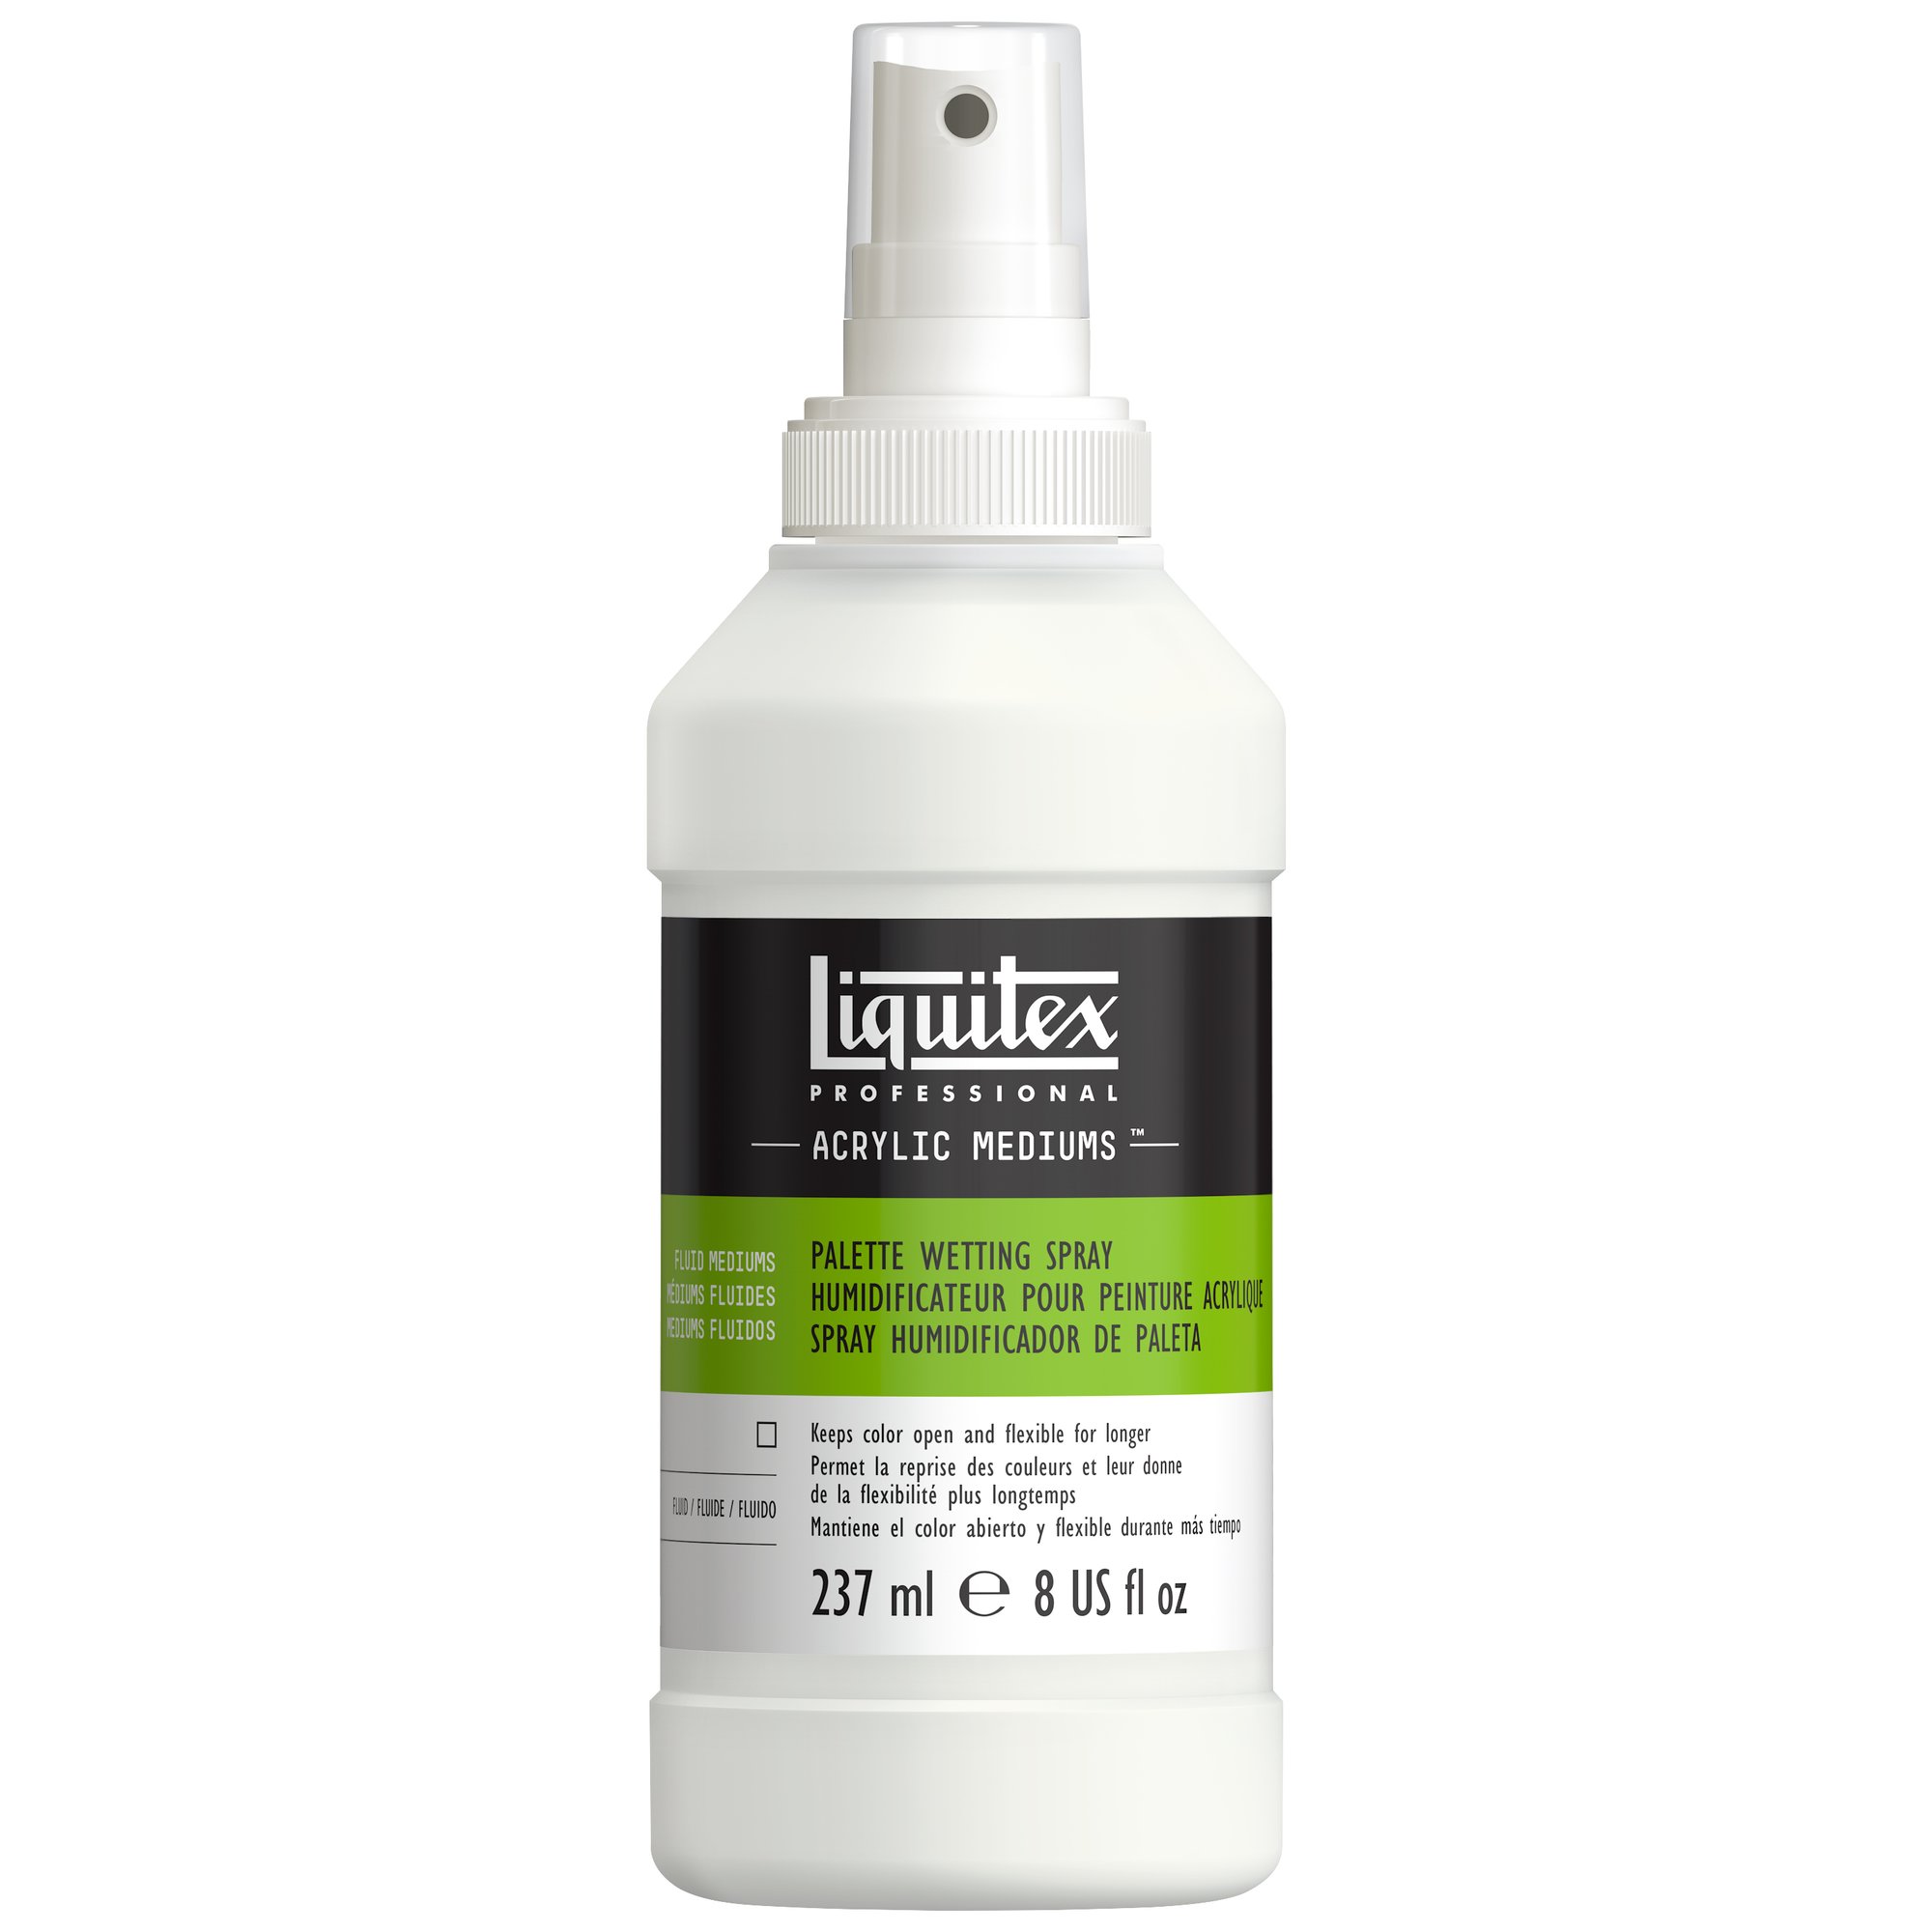 Liquitex Palette Wetting Spray, 8 oz. - image 1 of 10